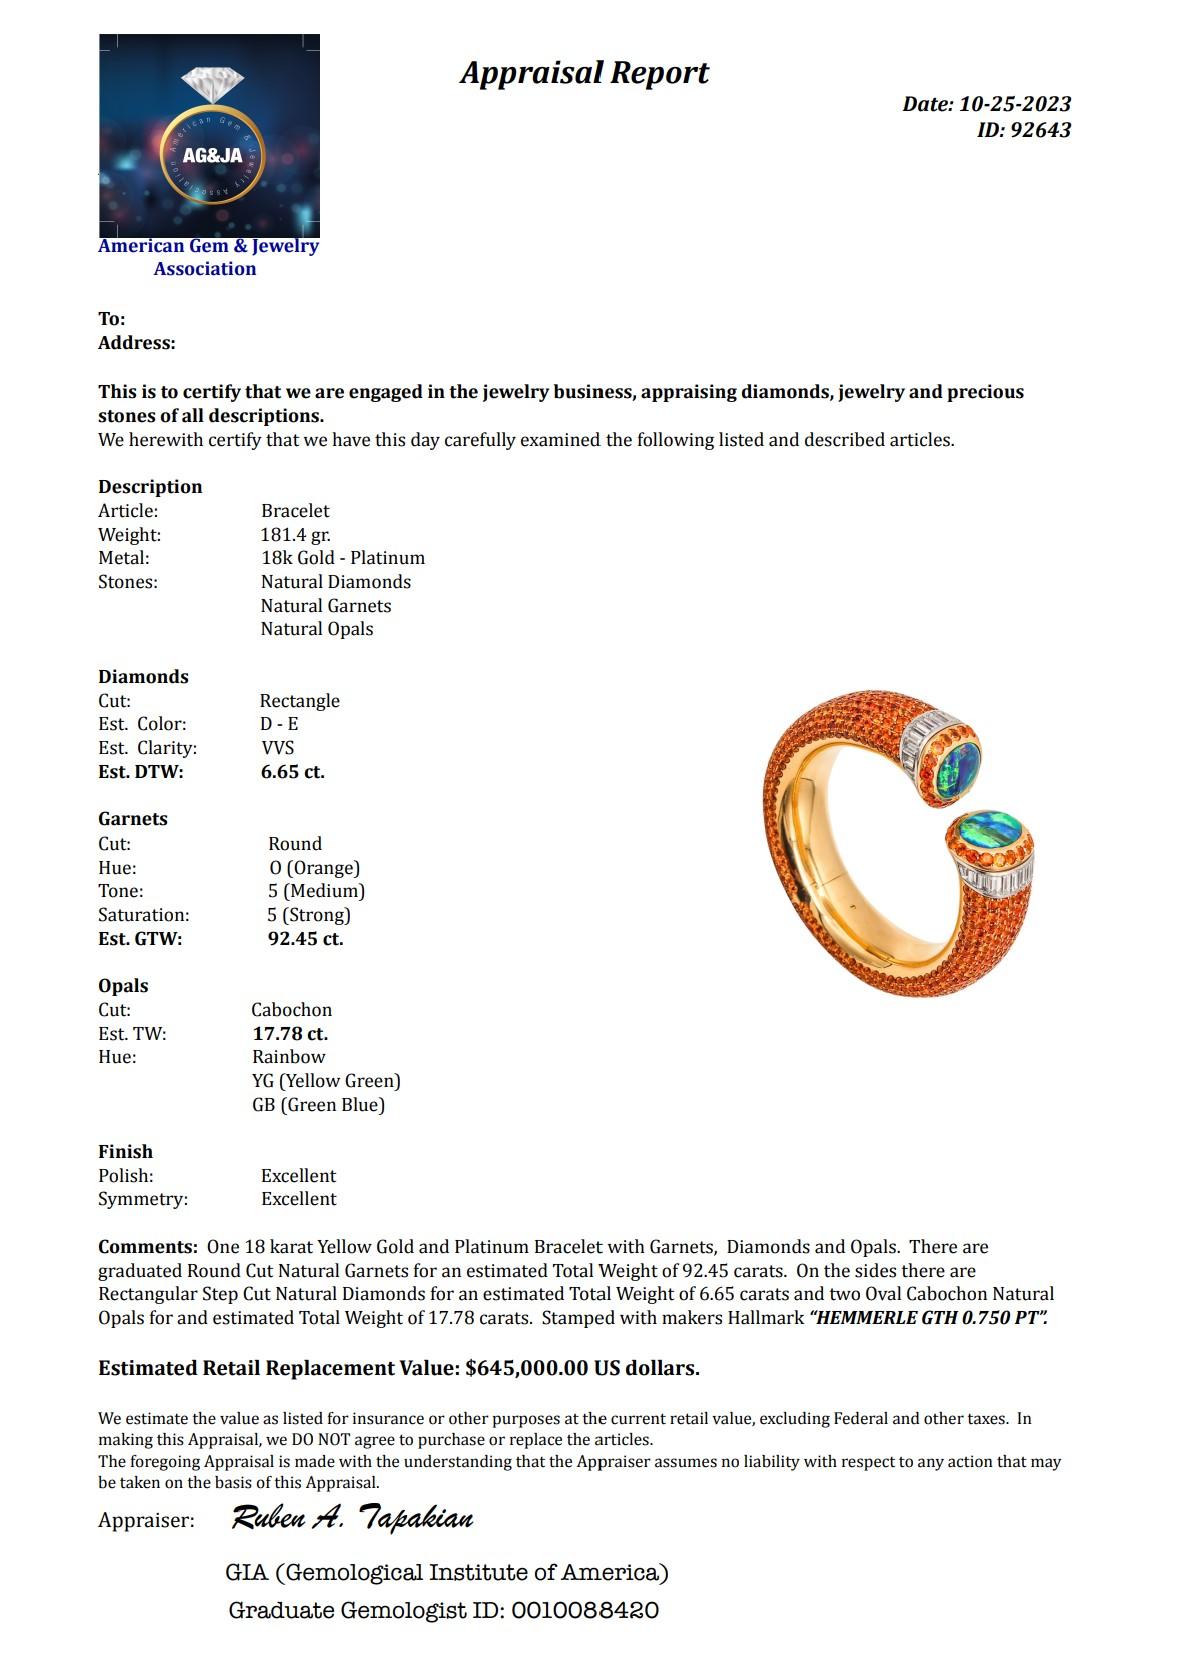 Hemmerle Mandarin Garnets Cuff Bracelet In 18Kt Gold Platinum Diamonds And Opals For Sale 4